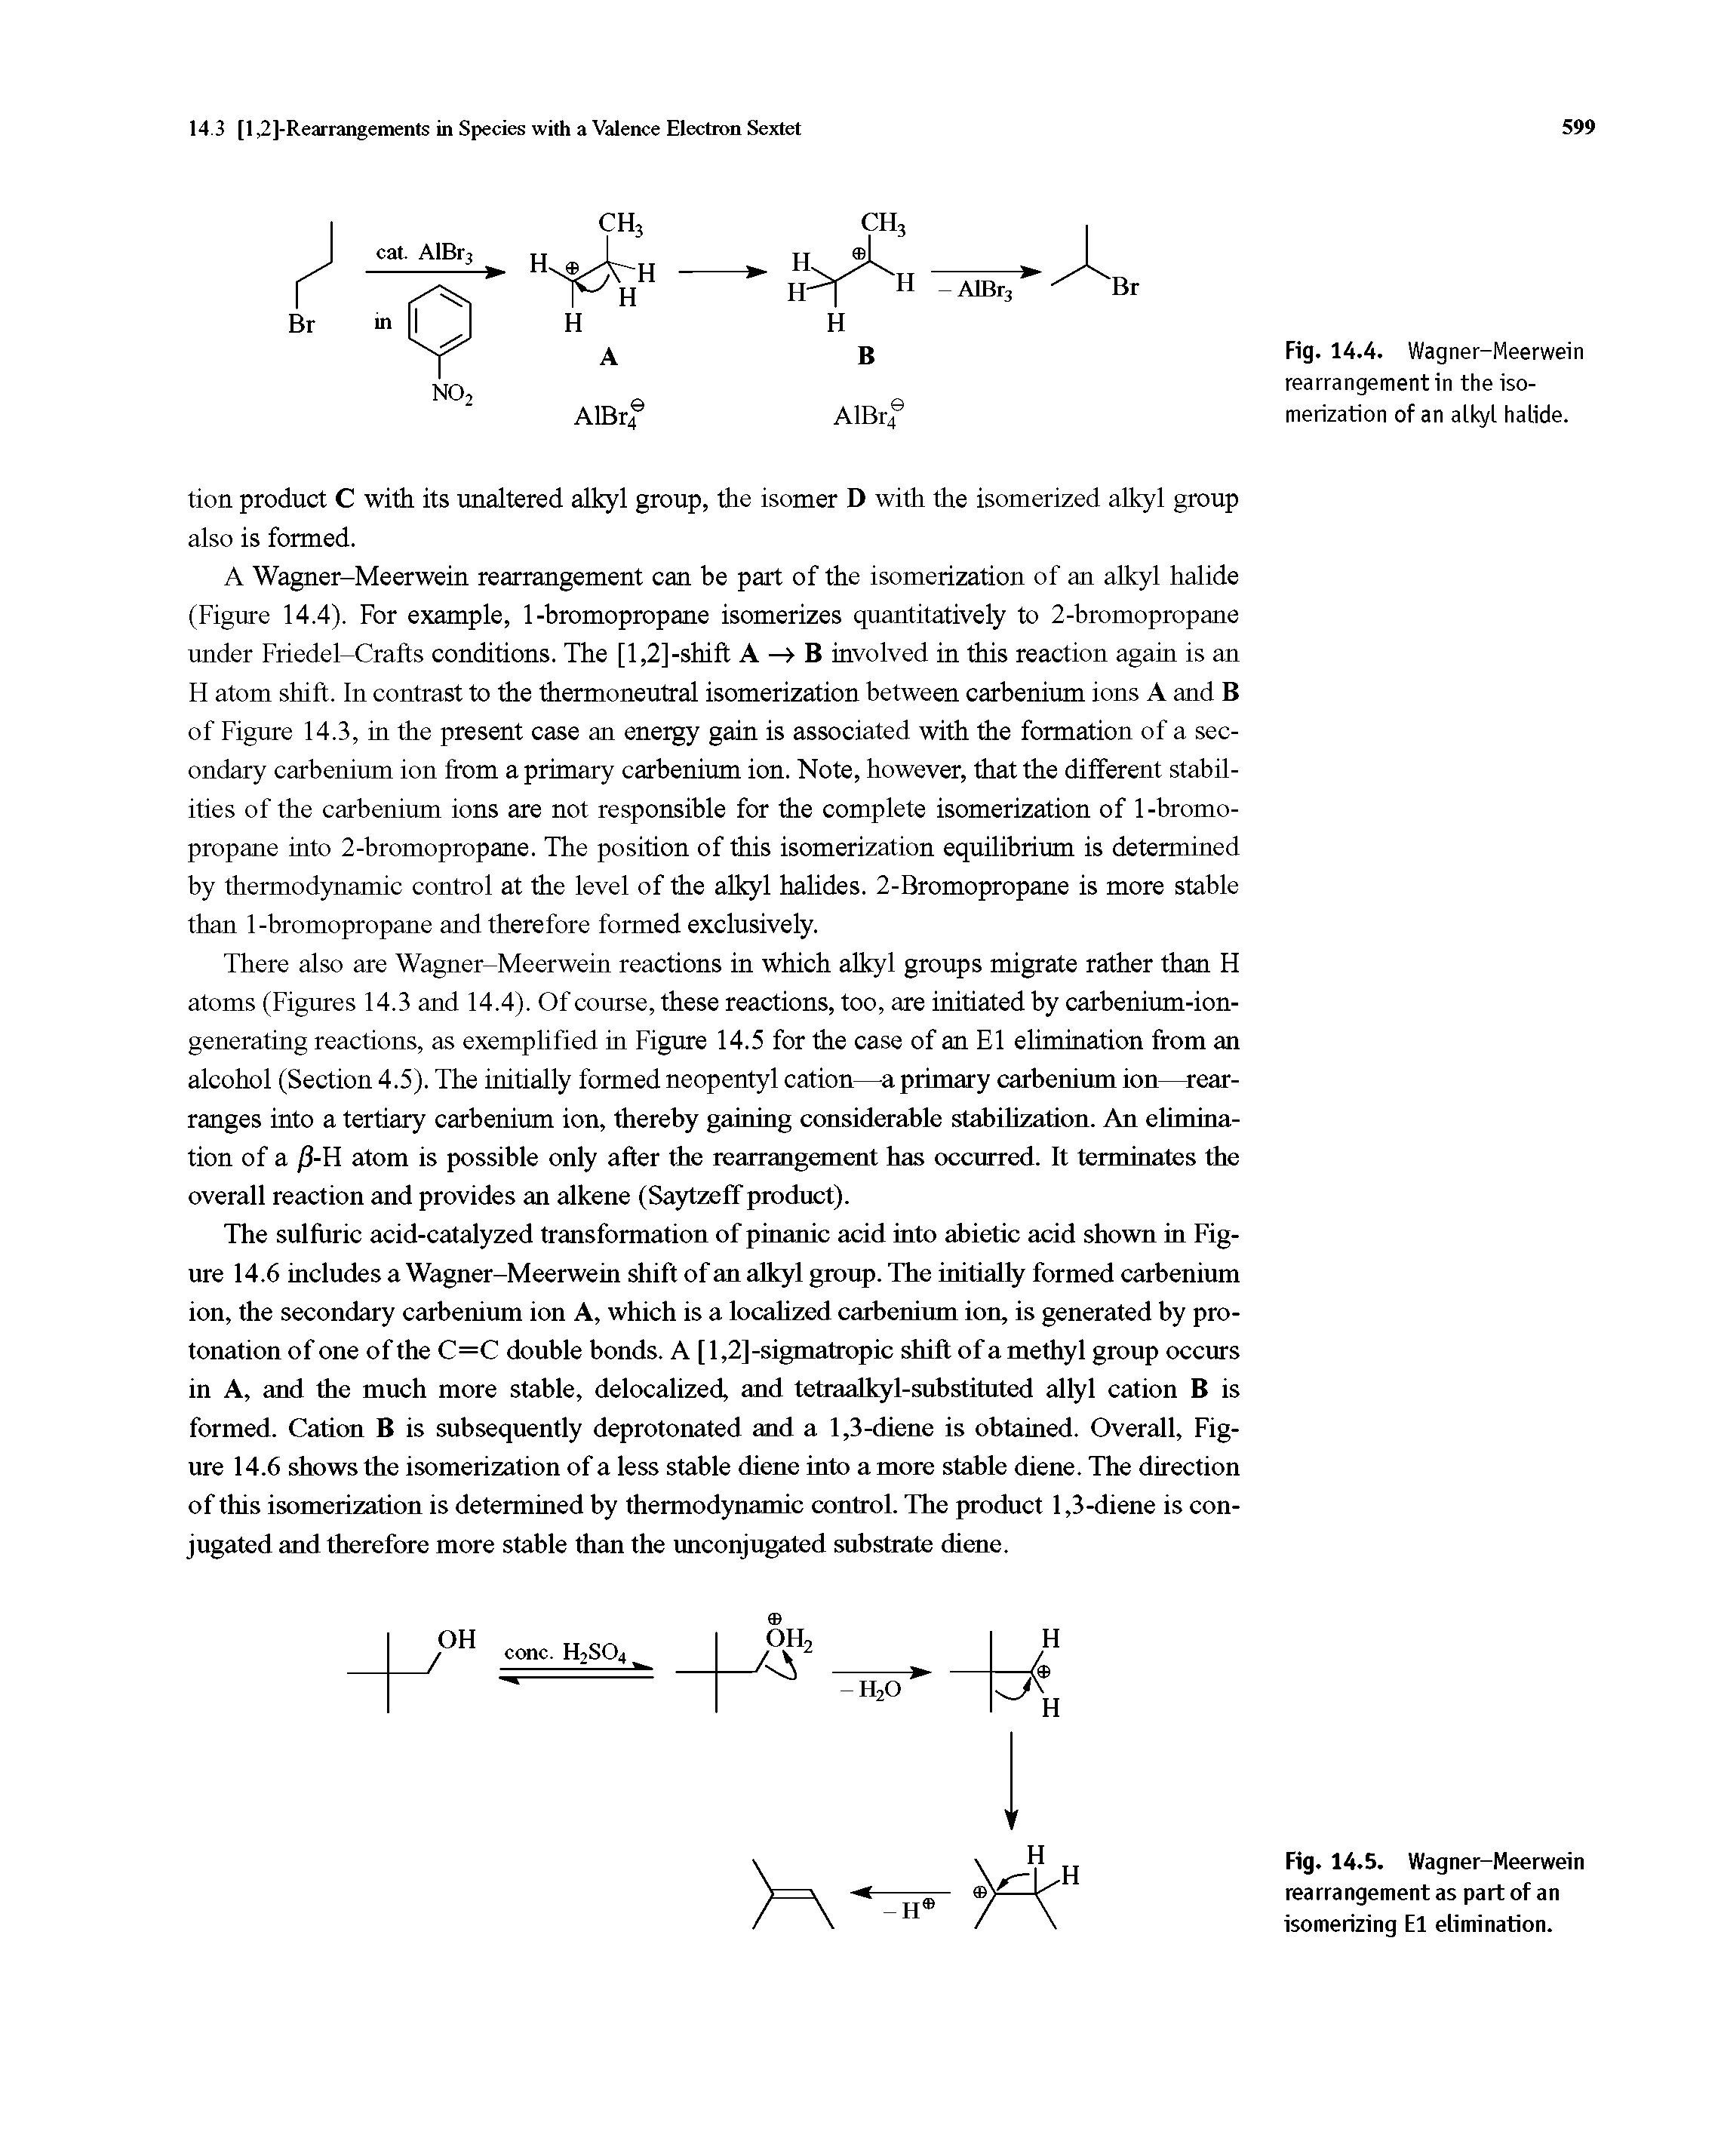 Fig. 14.4. Wagner-Meerwein rearrangement in the isomerization of an alkyl halide.